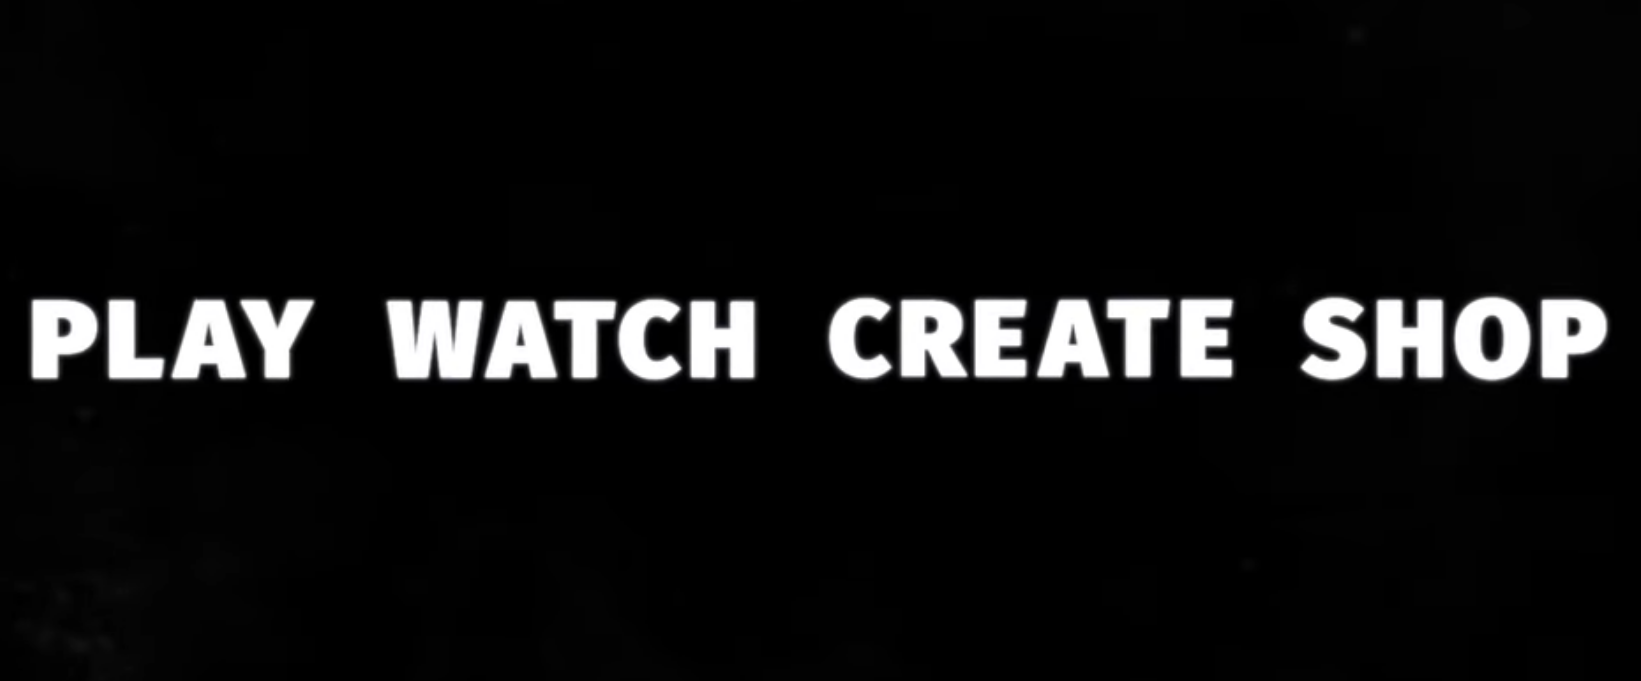 Play Watch Create Shop